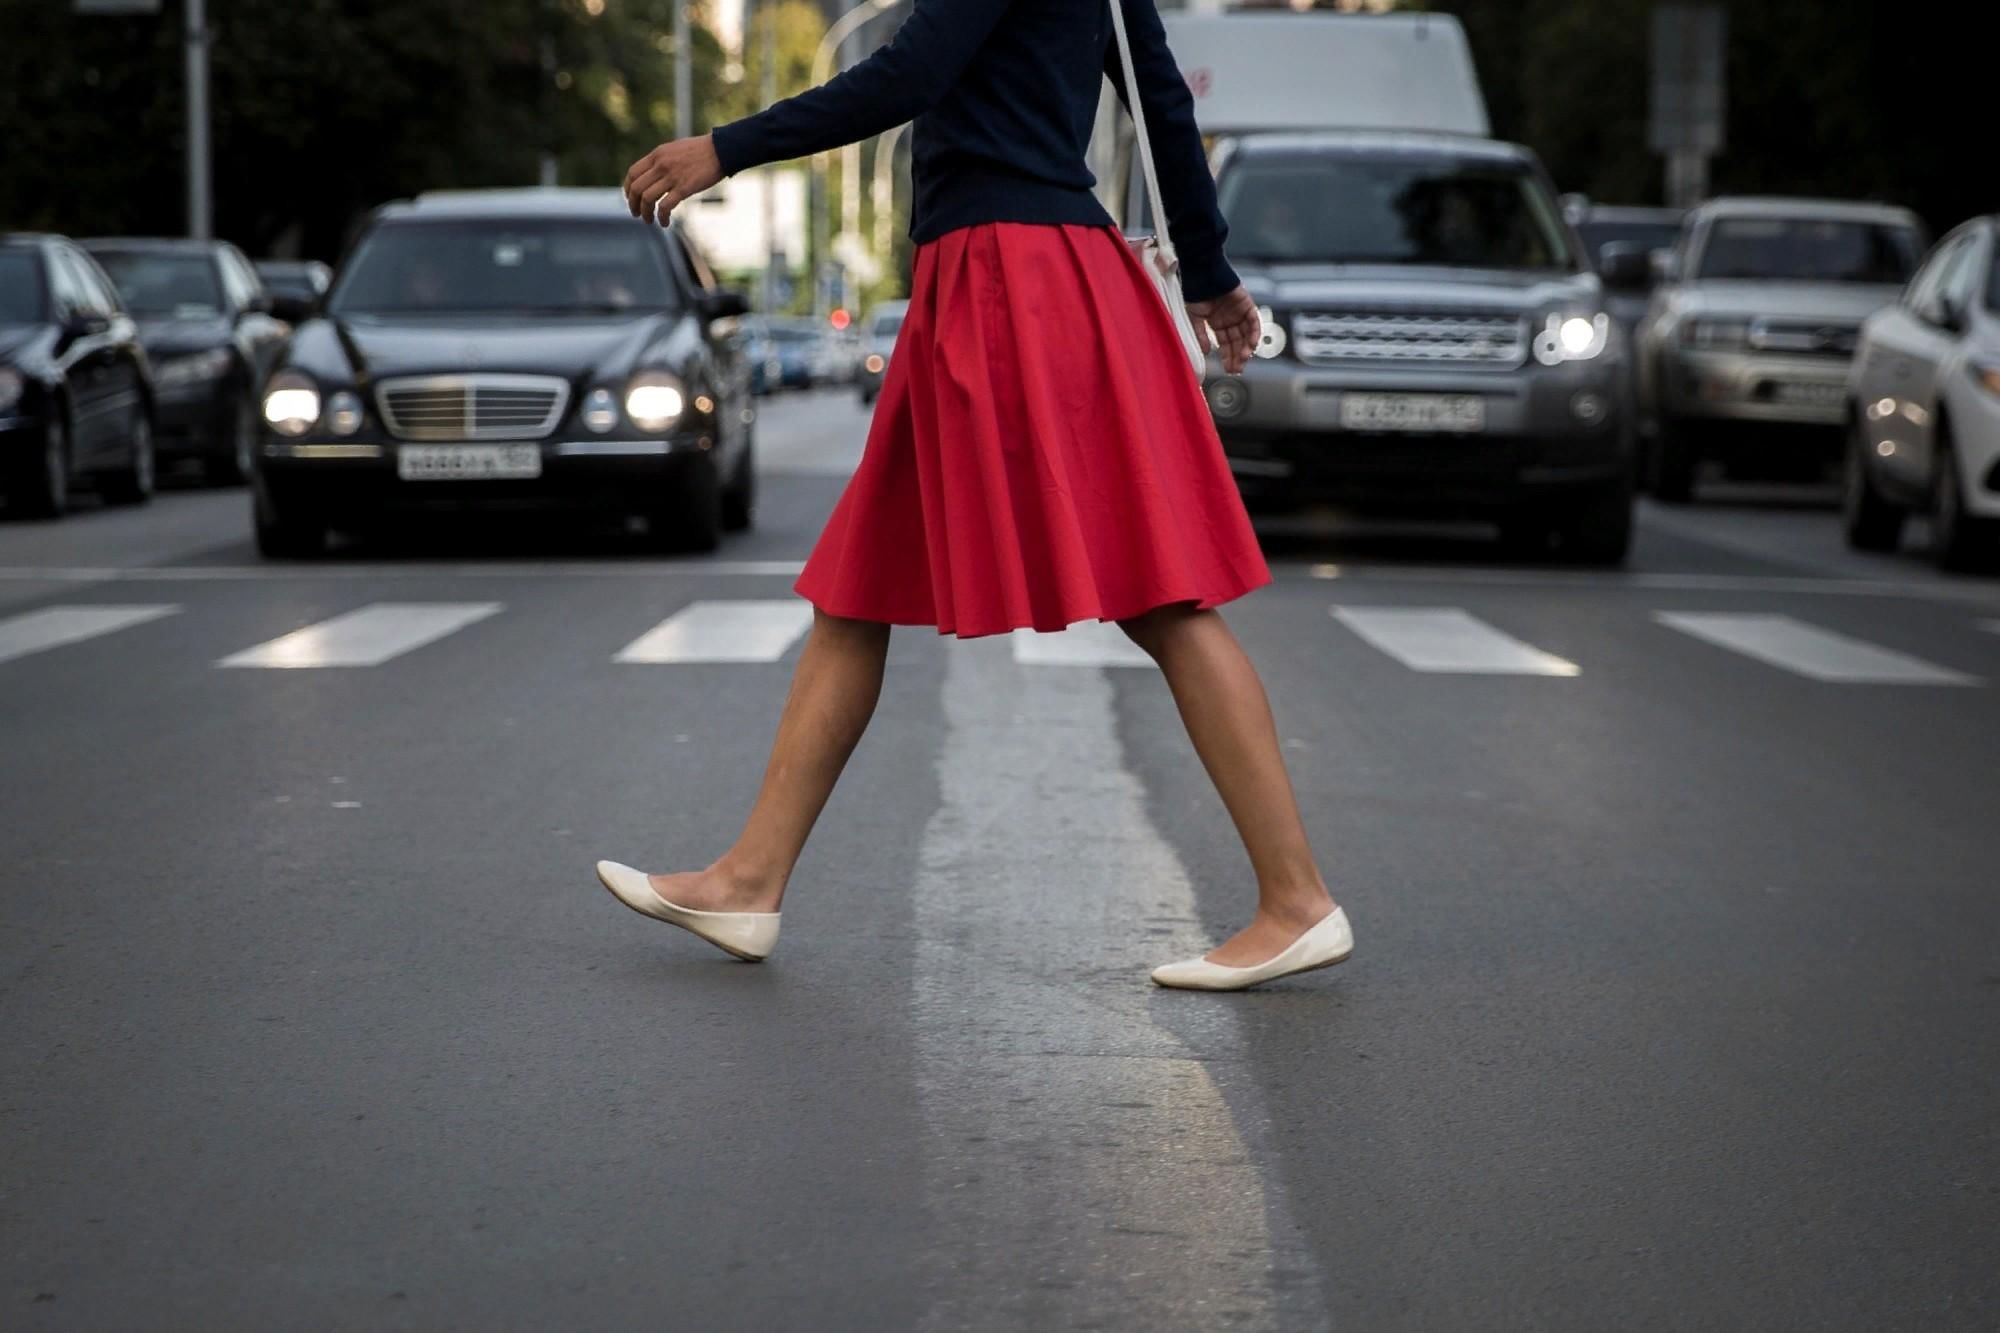 Переход дорого. Пешеход. Девушка переходит дорогу. Девушка на пешеходном переходе. Перебегает дорогу.